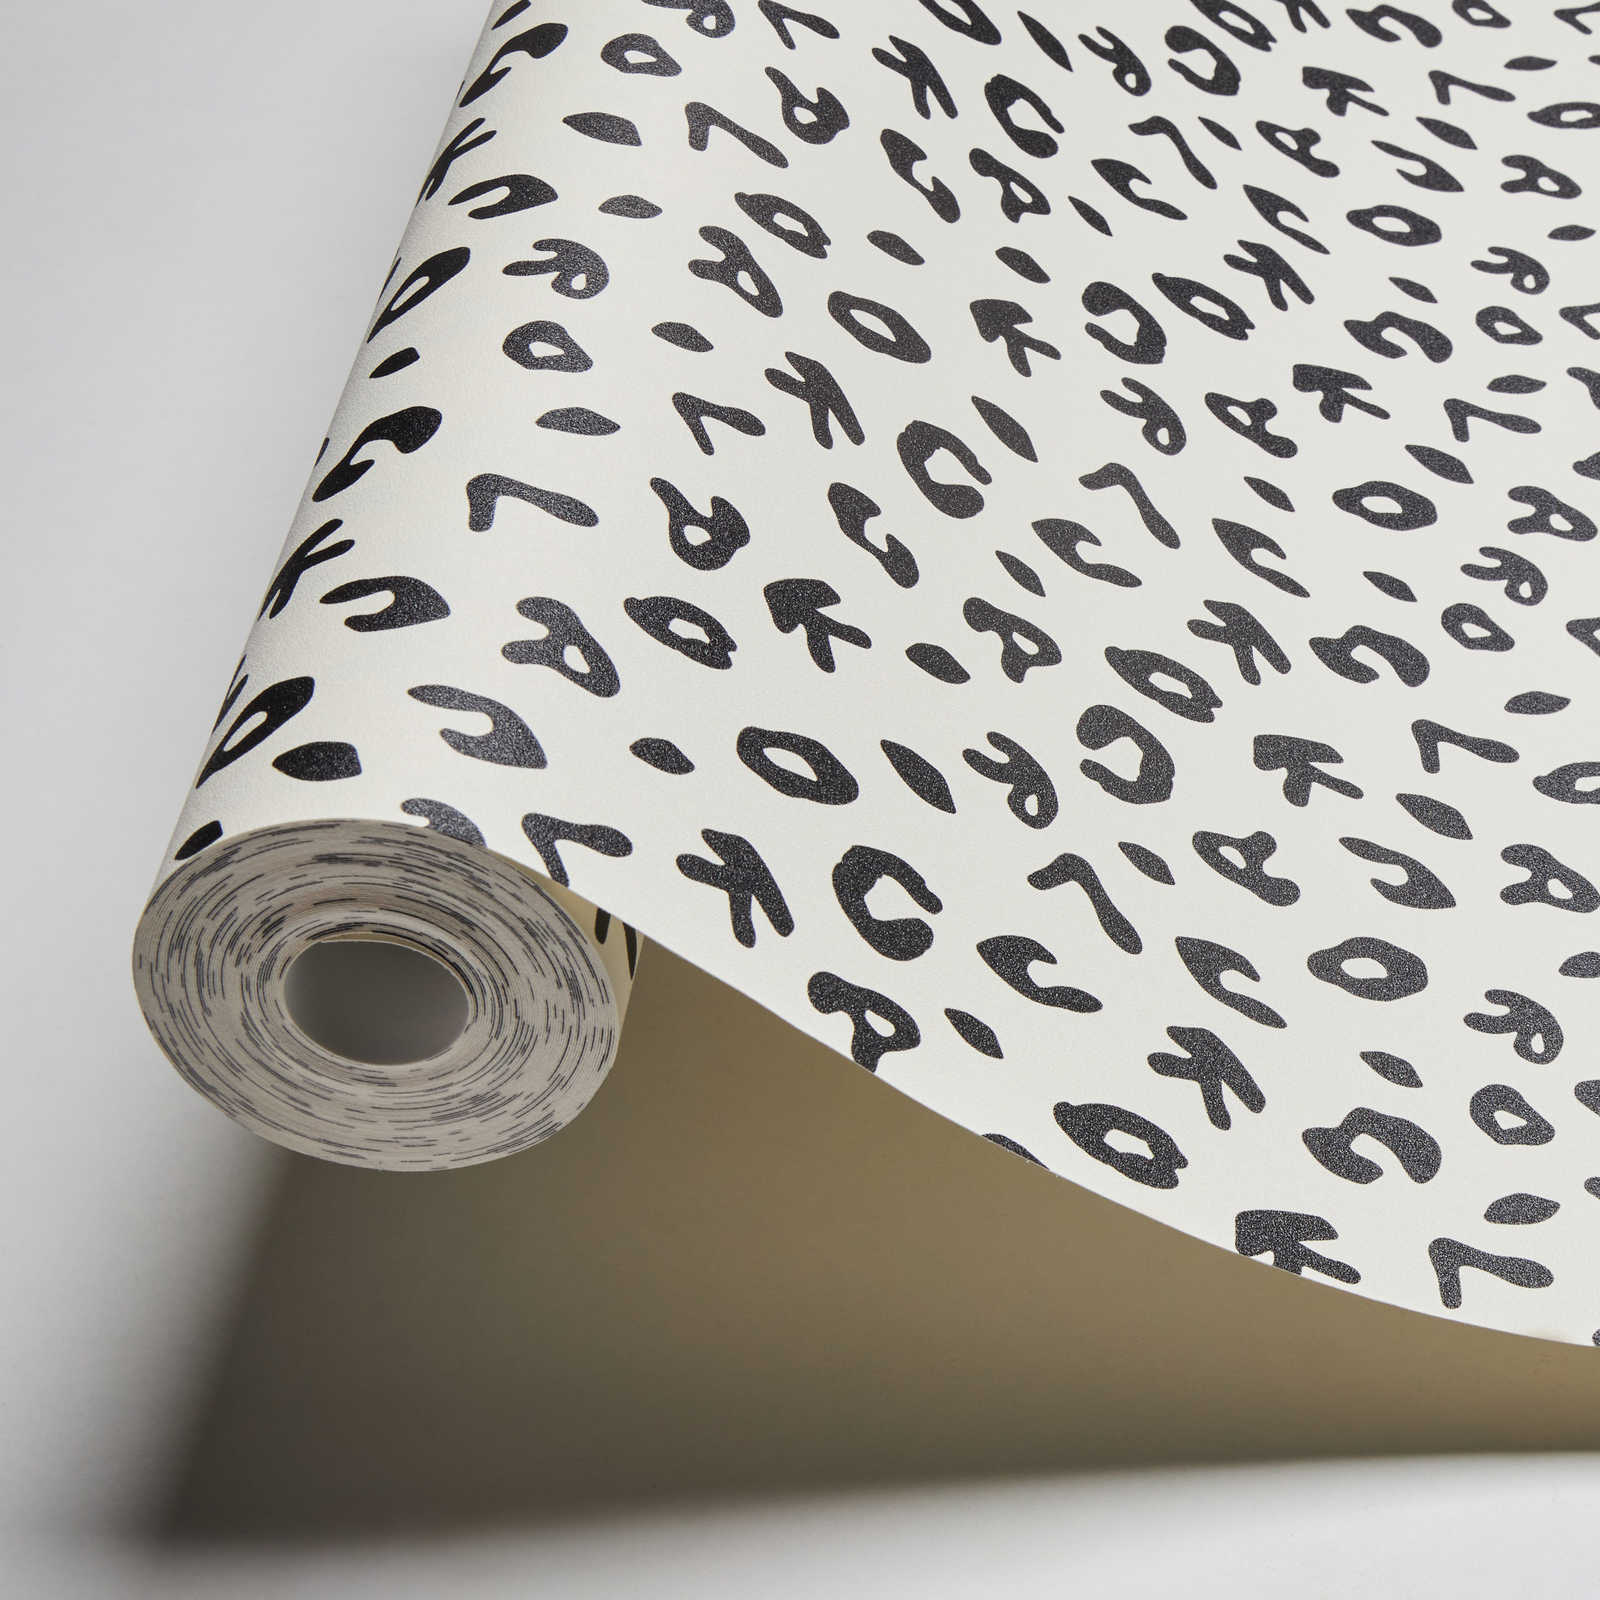             Karl LAGERFELD leopard print style wallpaper - Black, White
        